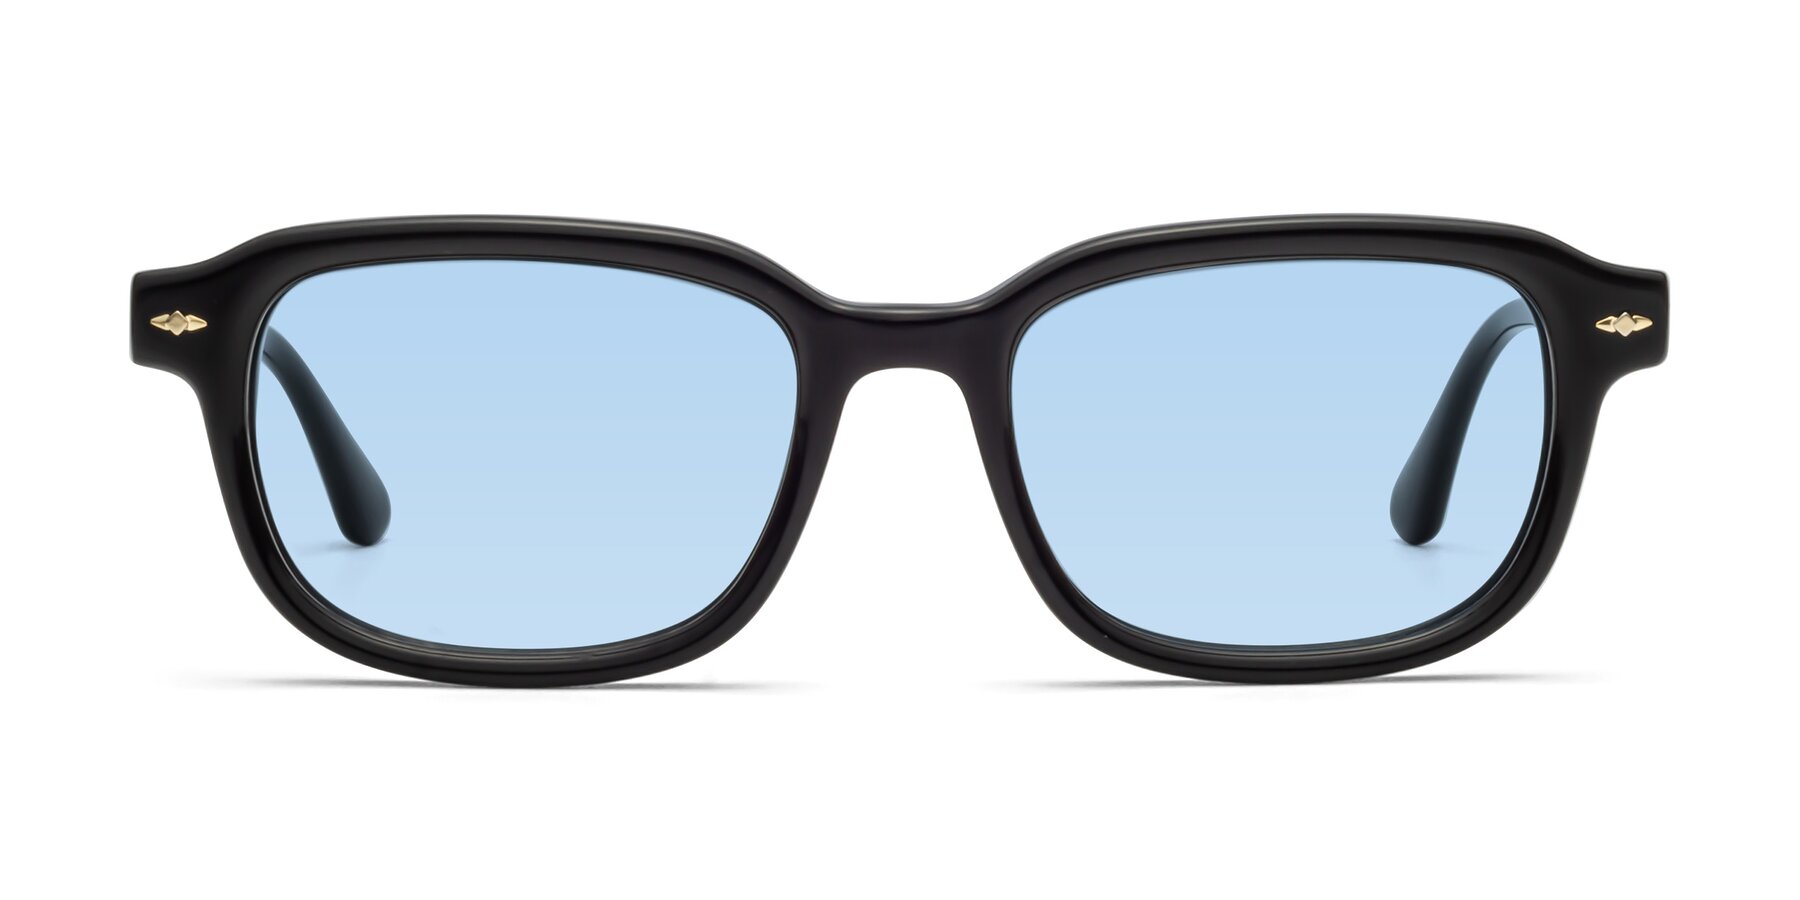 1477 - Black Sunglasses